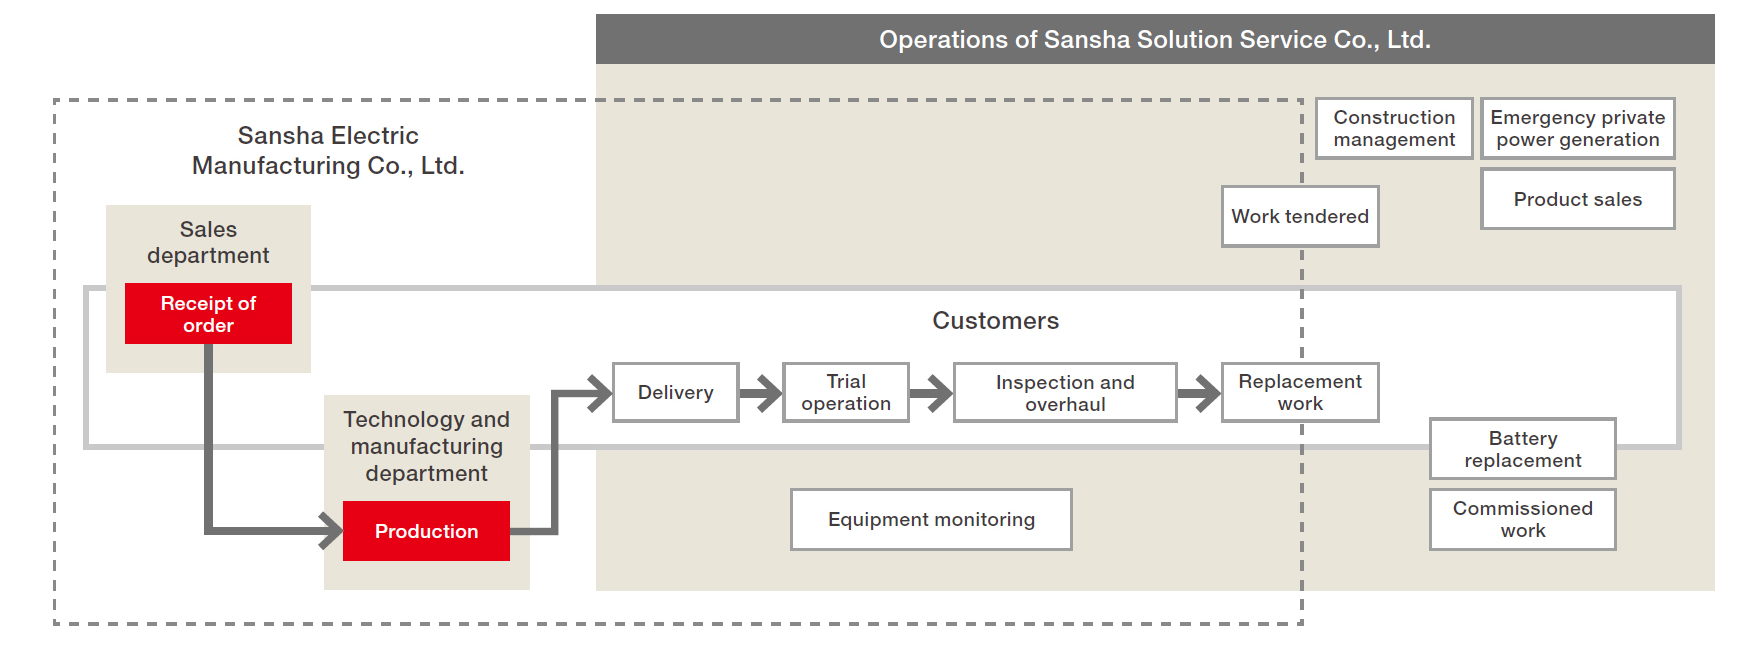 Sansha Electric Manufacturing Group's comprehensive solution services